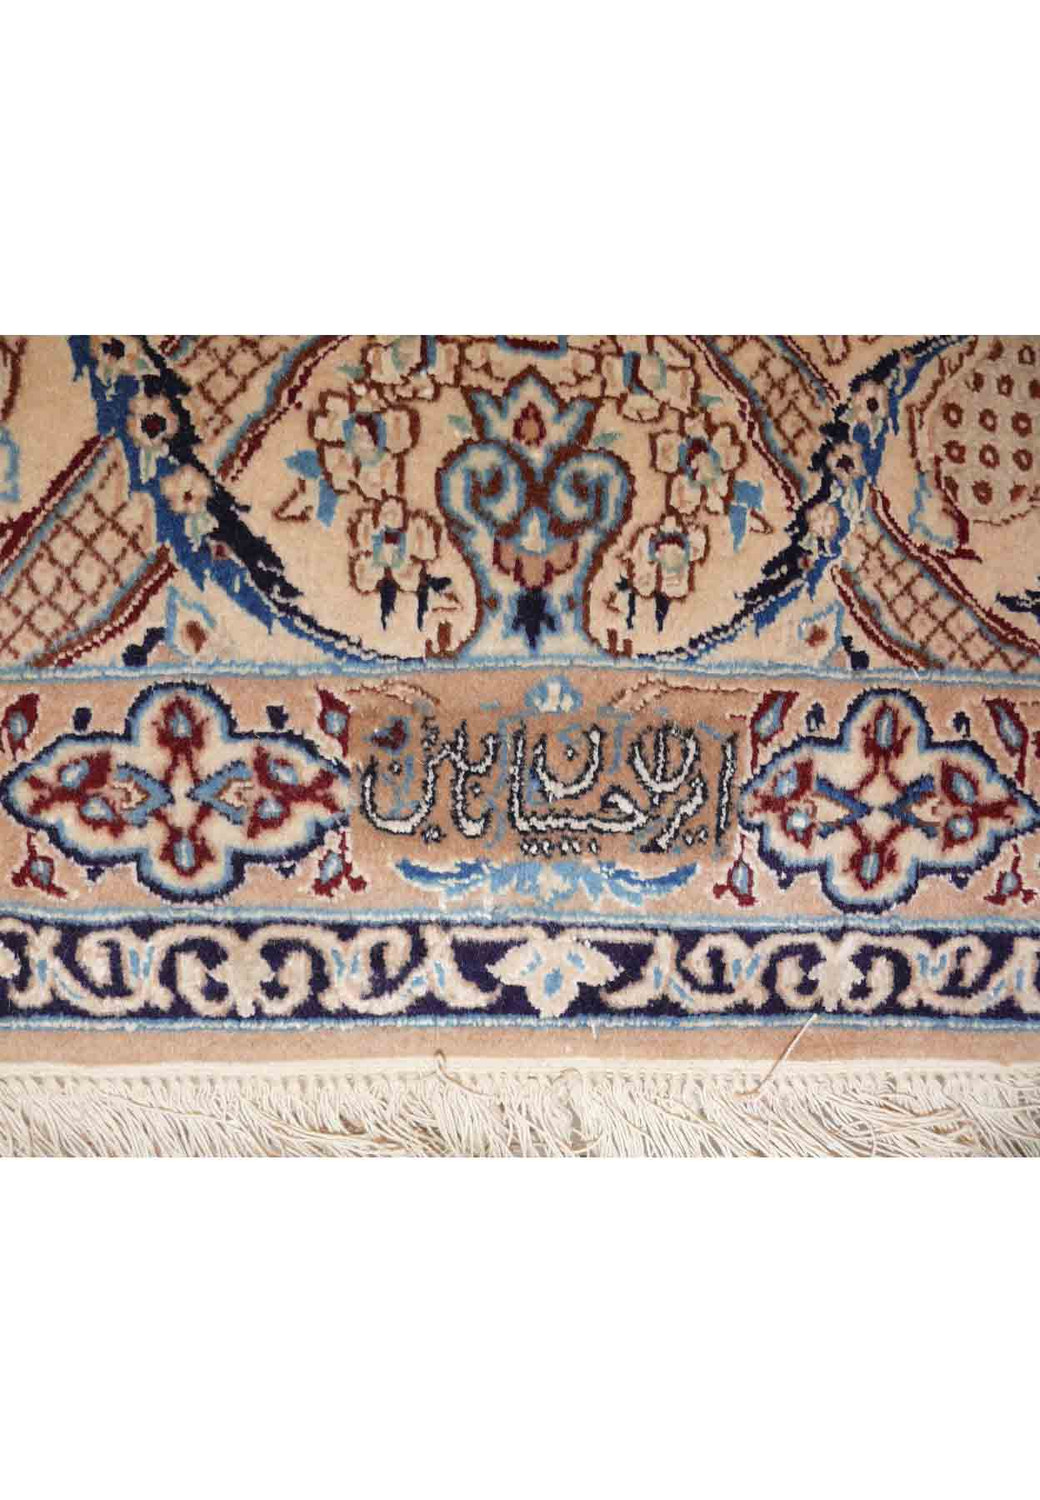 7 x 10 Persian Nain 6 Laa Rug Wool & Silk with signature of master weaver